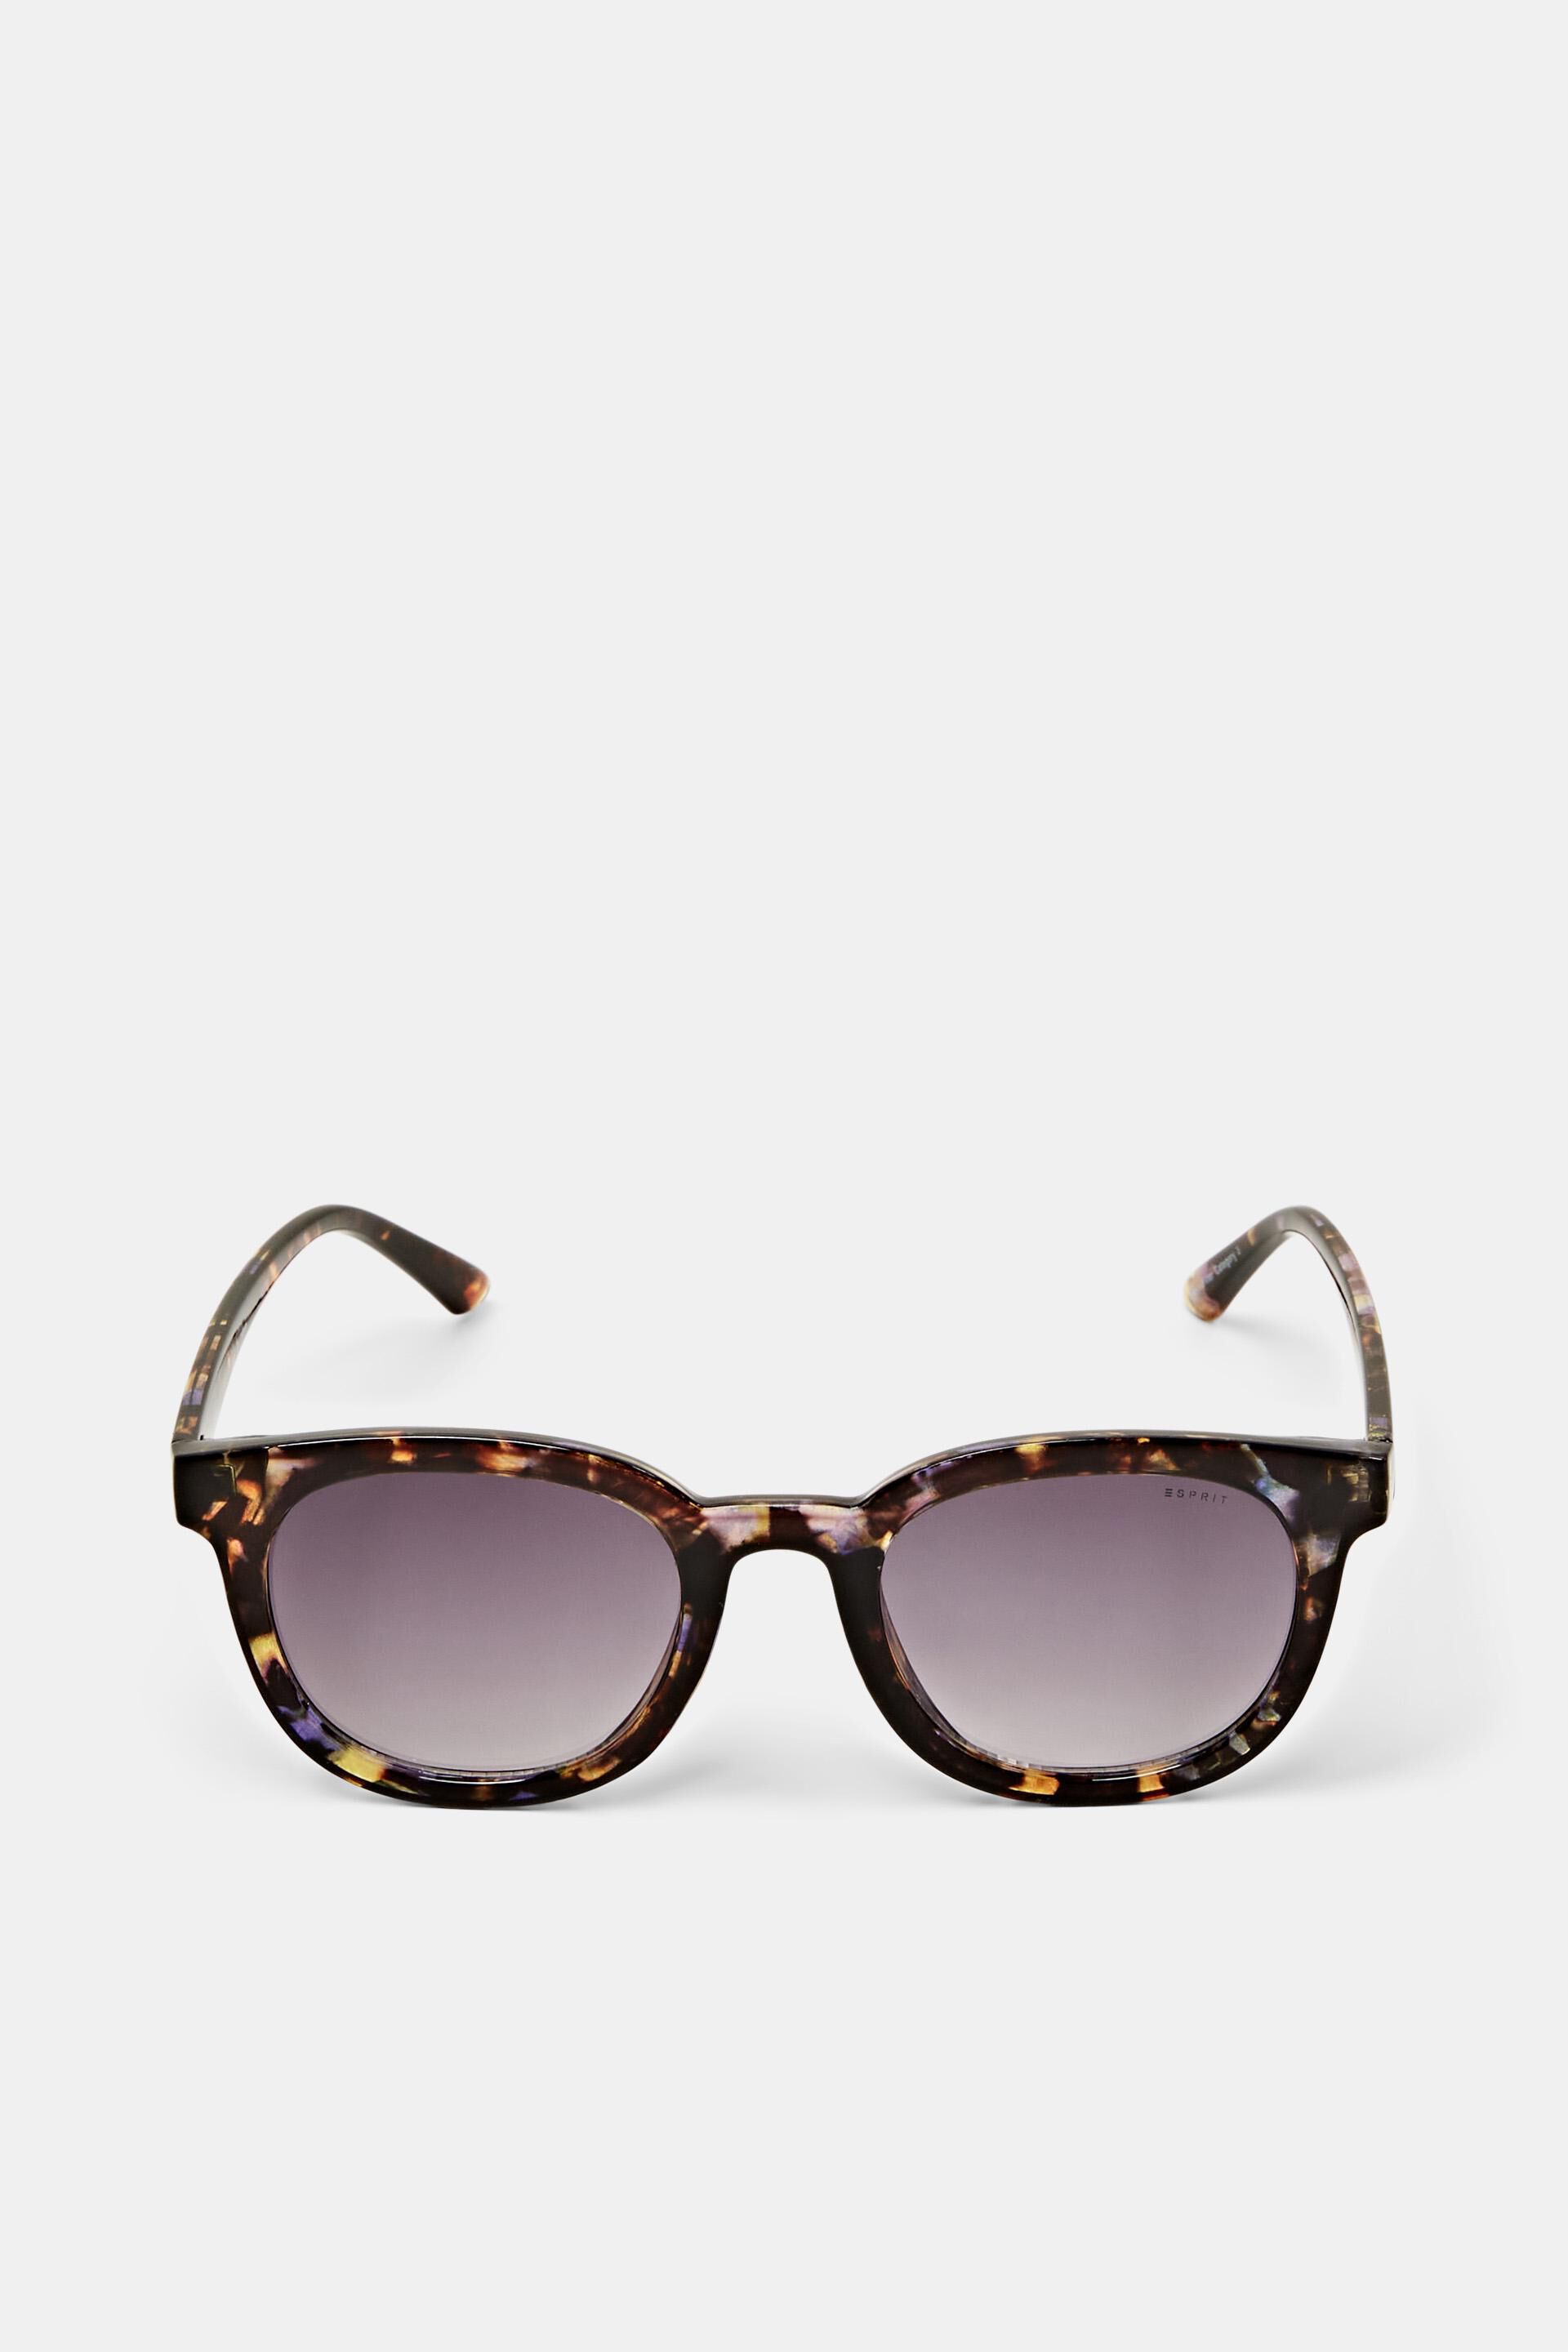 Esprit sunglasses Round framed